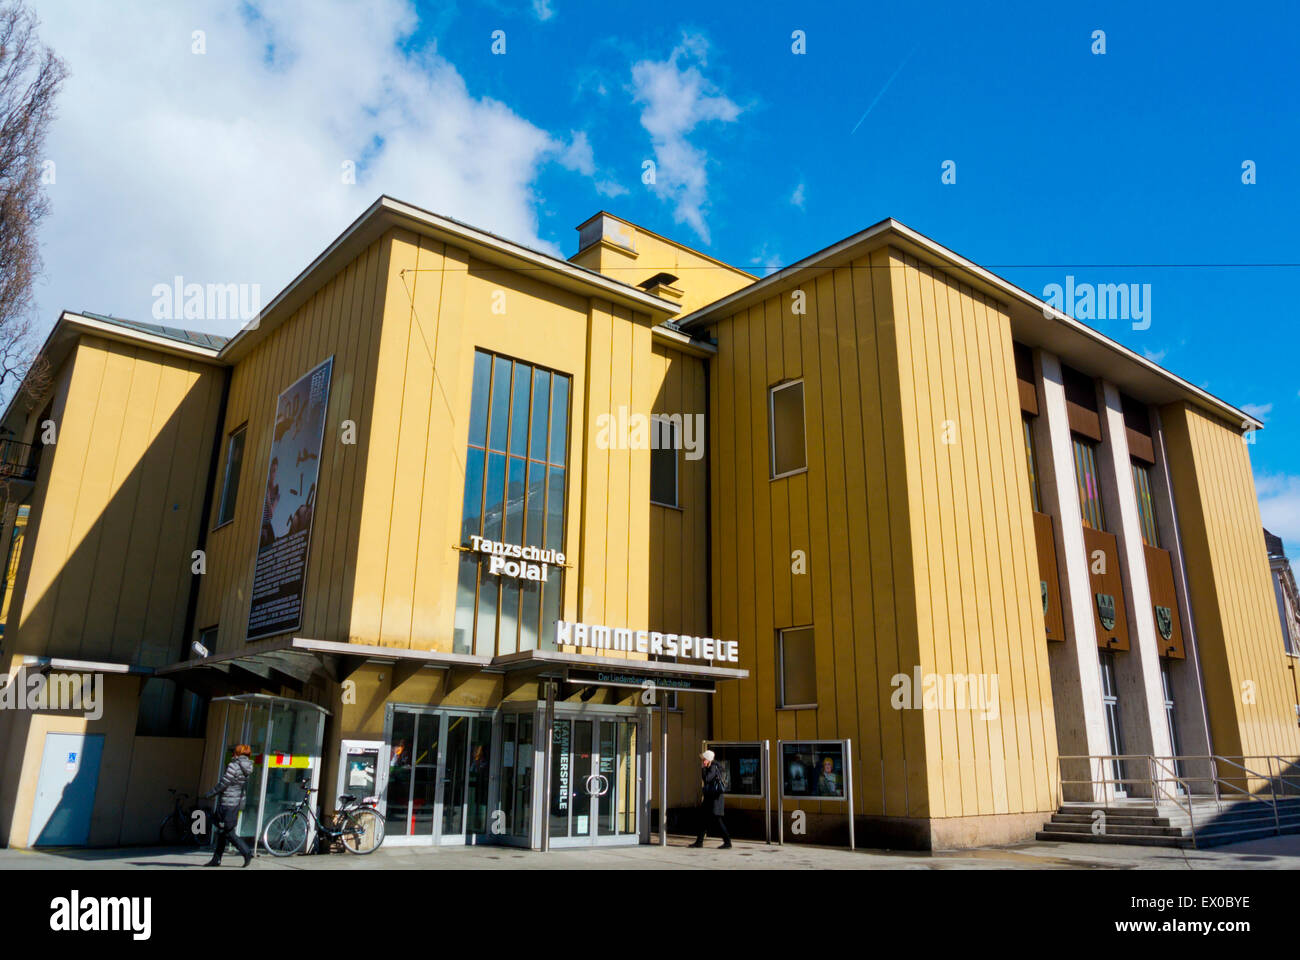 Kammerspiele, smaller theatre with Polal dance theatre, extension of Landestheater, Innsbruck, Inn Valley, Tyrol, Austria Stock Photo